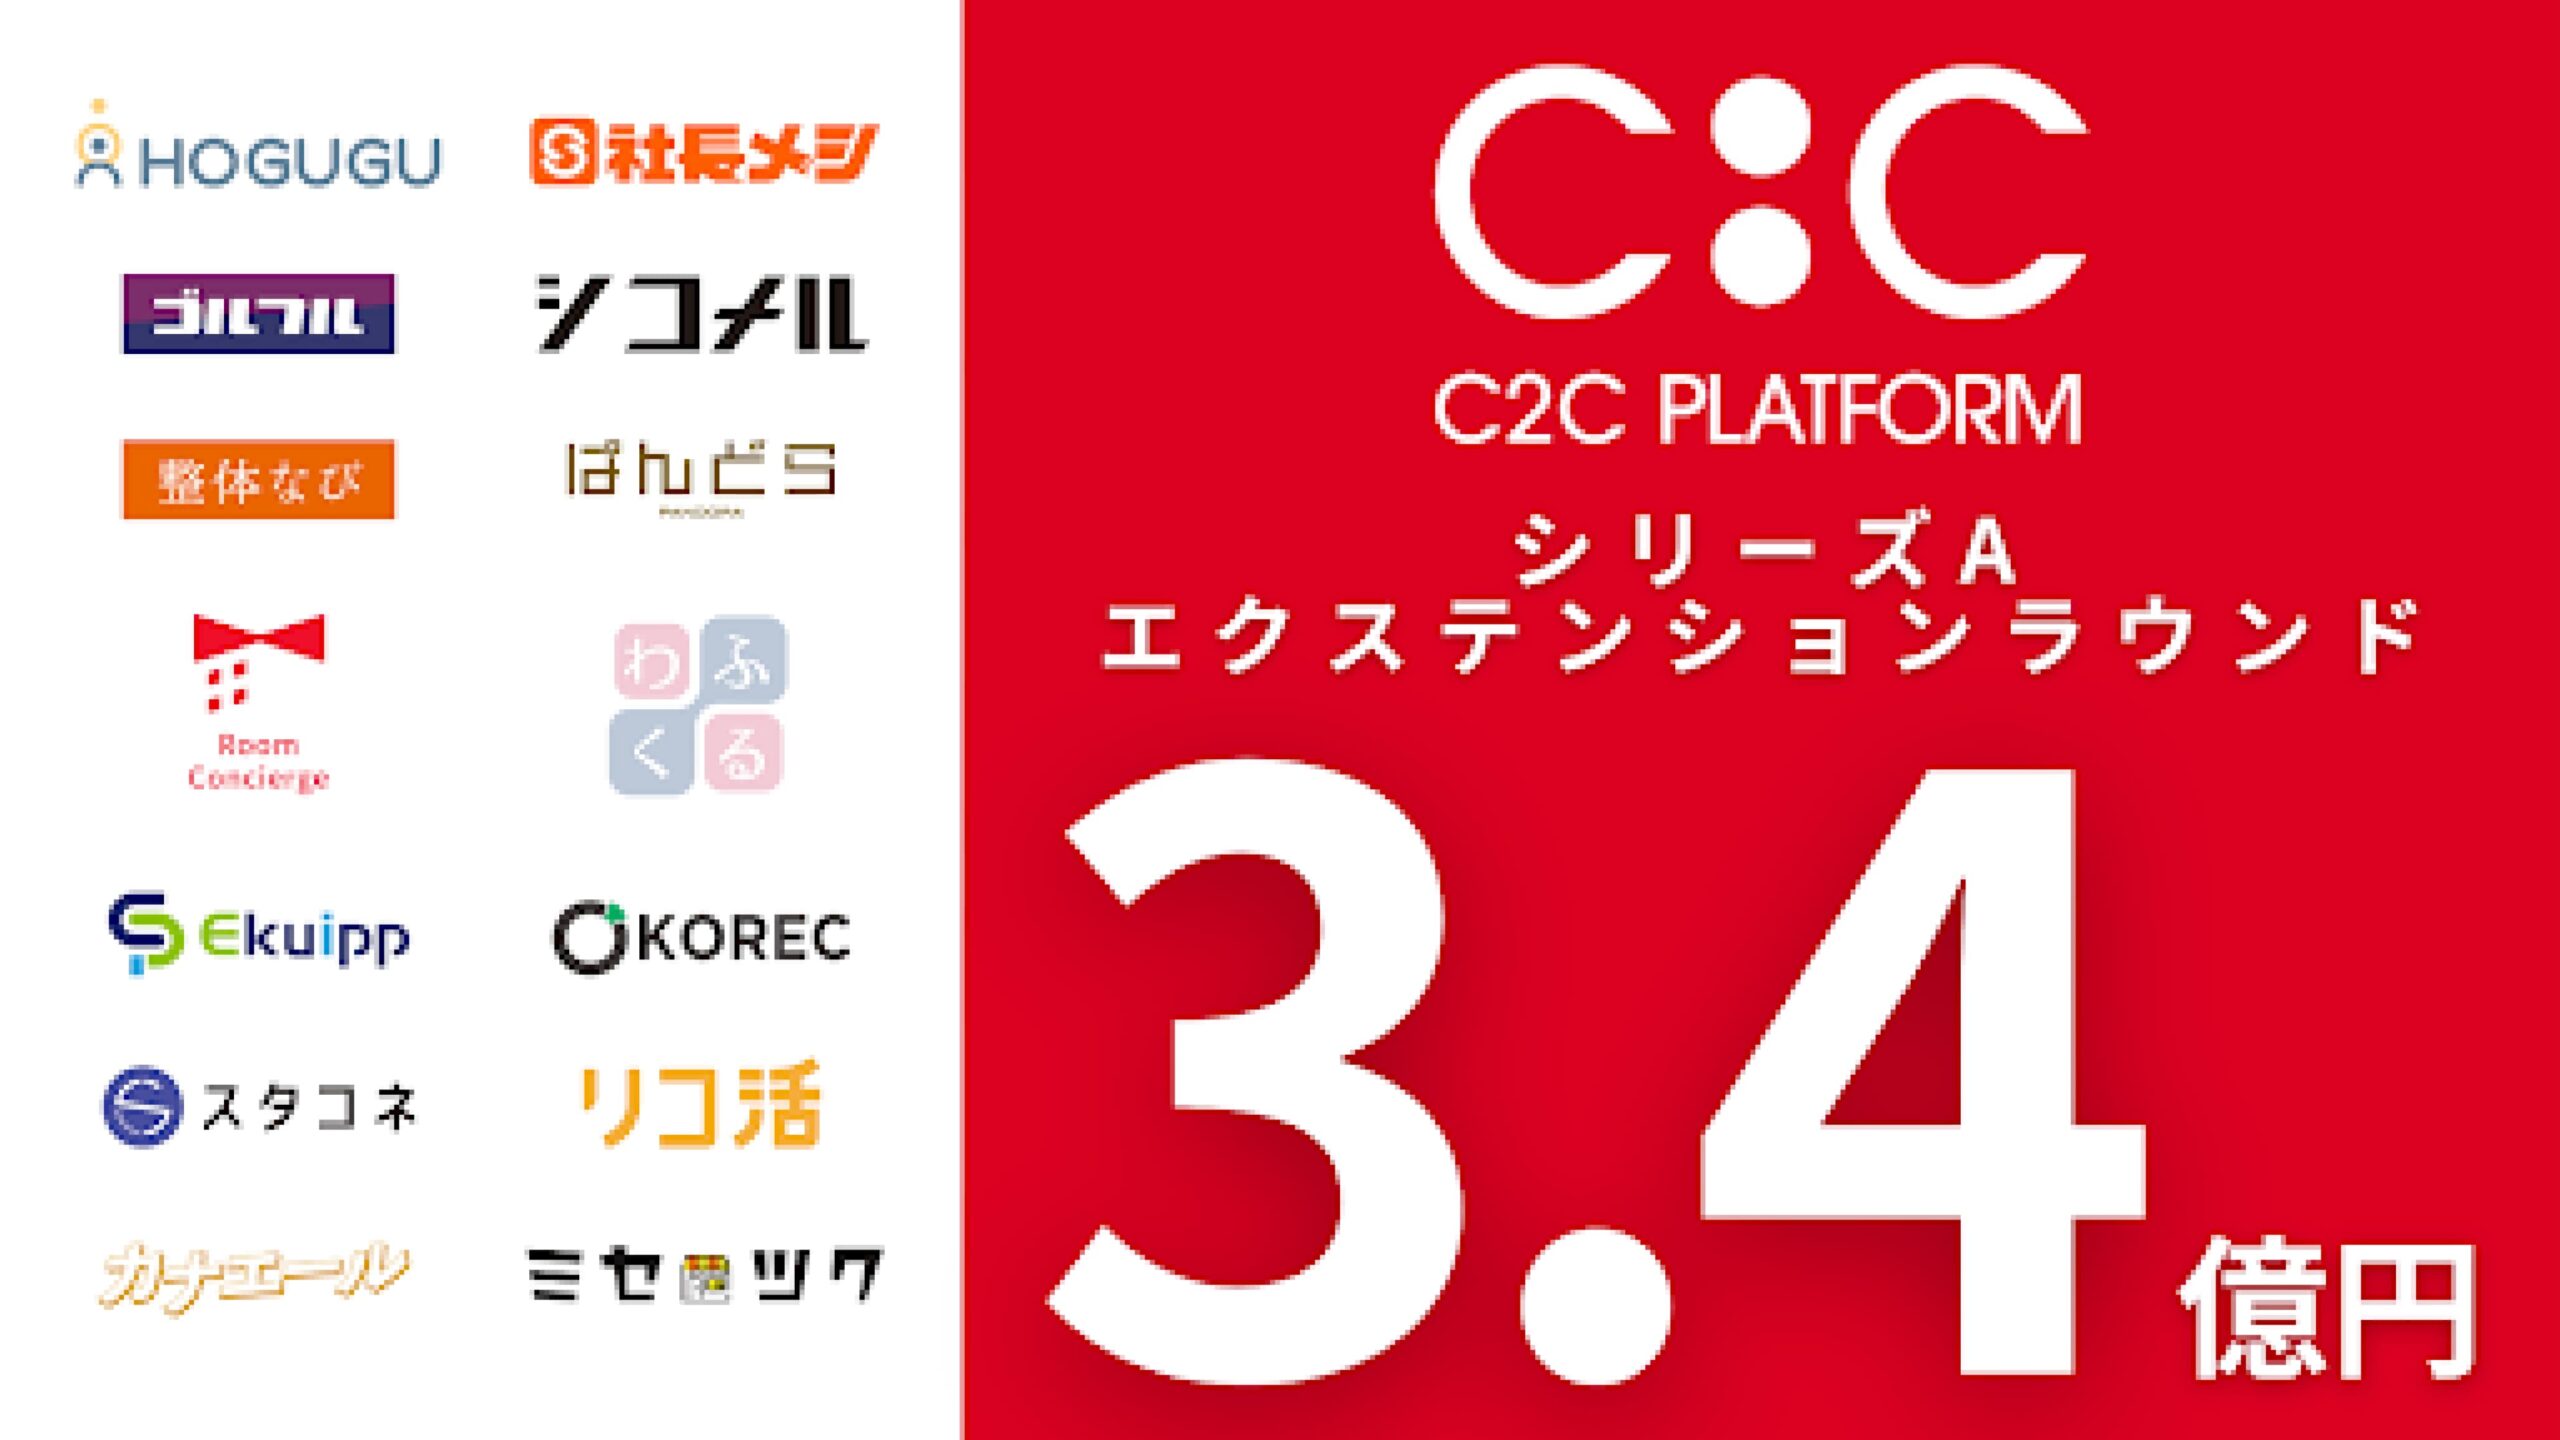 C2C Platform、約3.4億円の資金調達を実施し、ダイレクトマッチング事業を加速